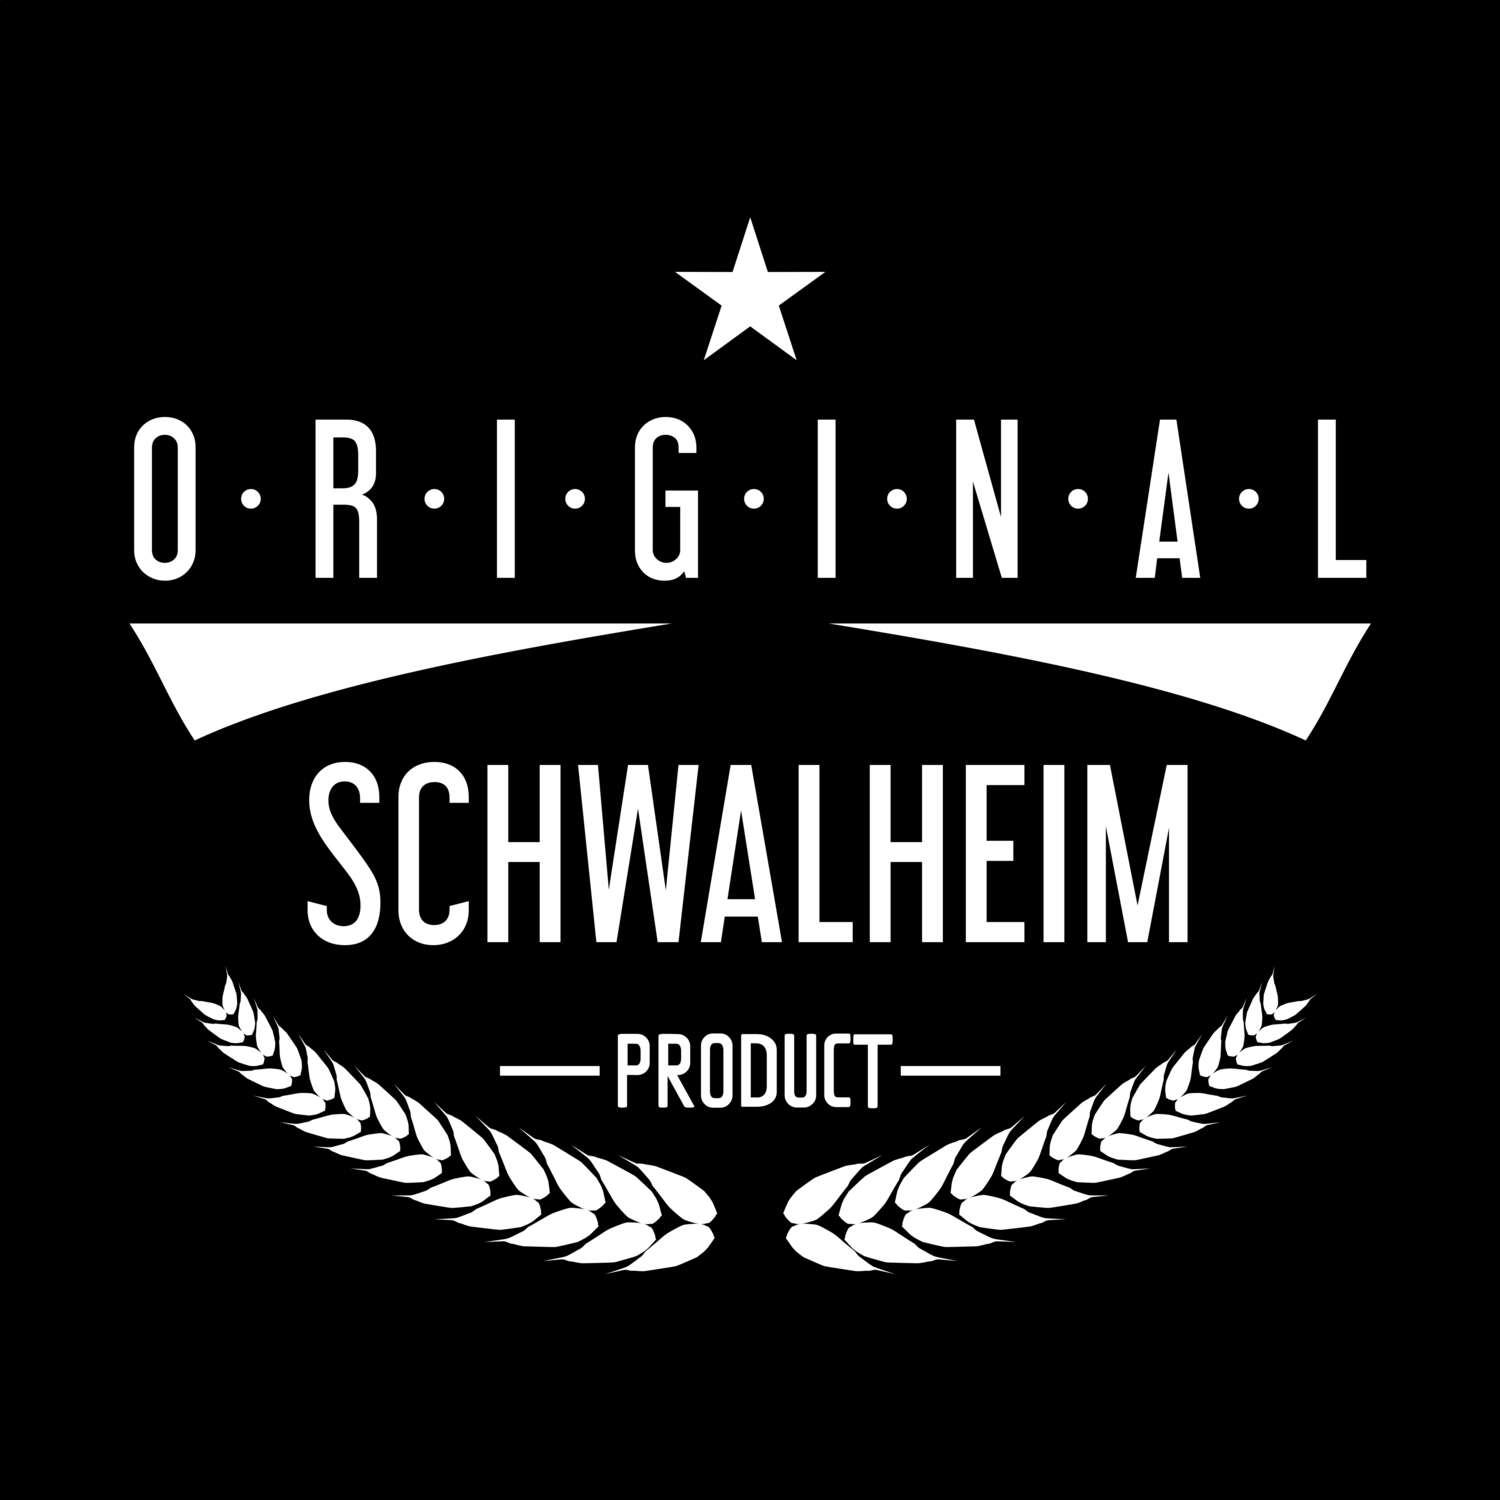 Schwalheim T-Shirt »Original Product«